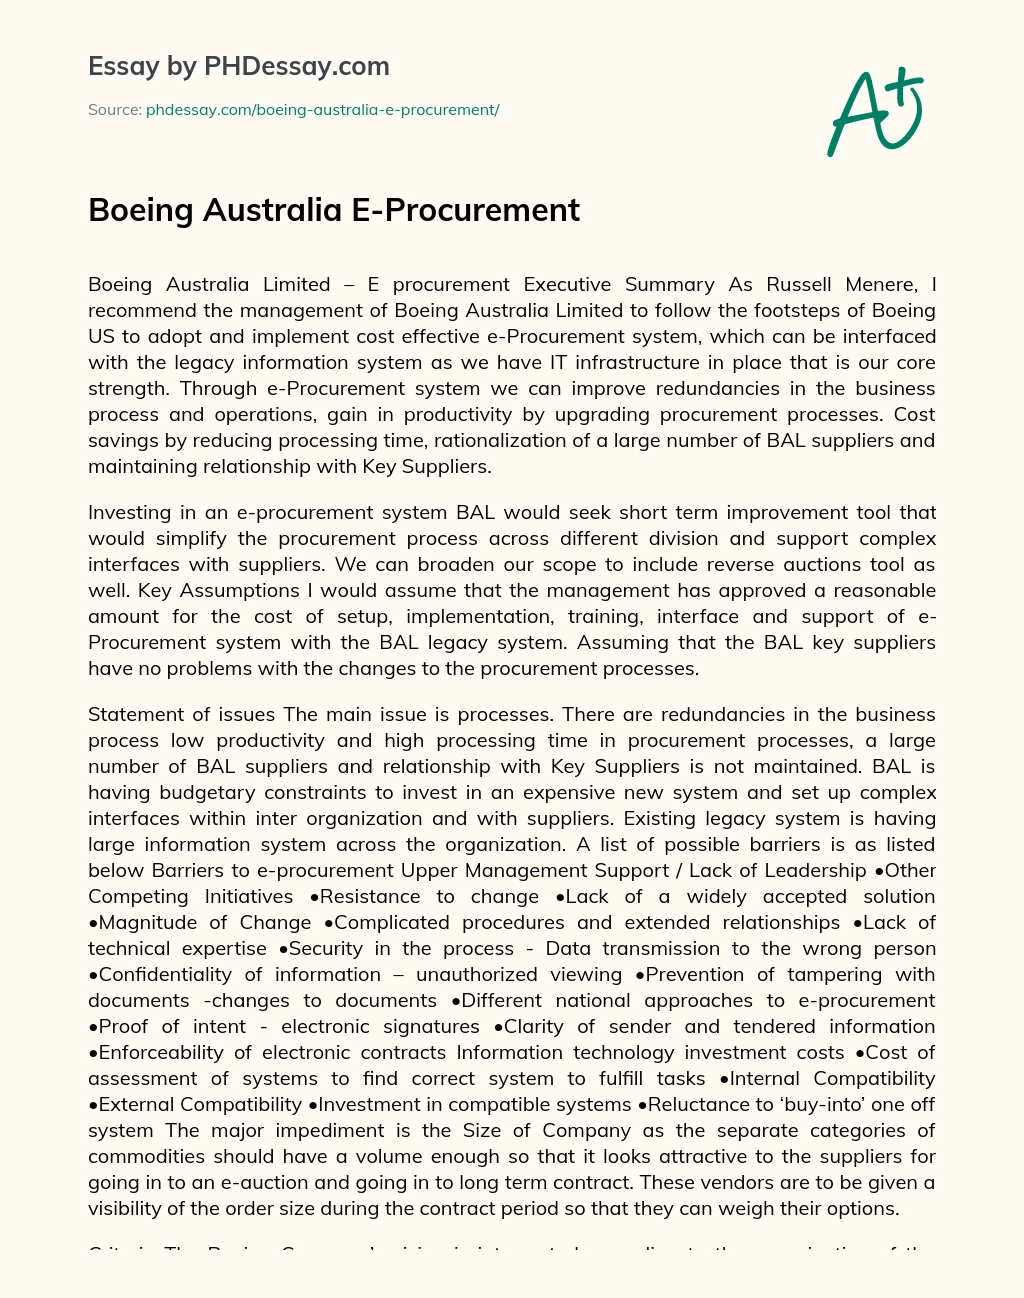 Boeing Australia E-Procurement essay